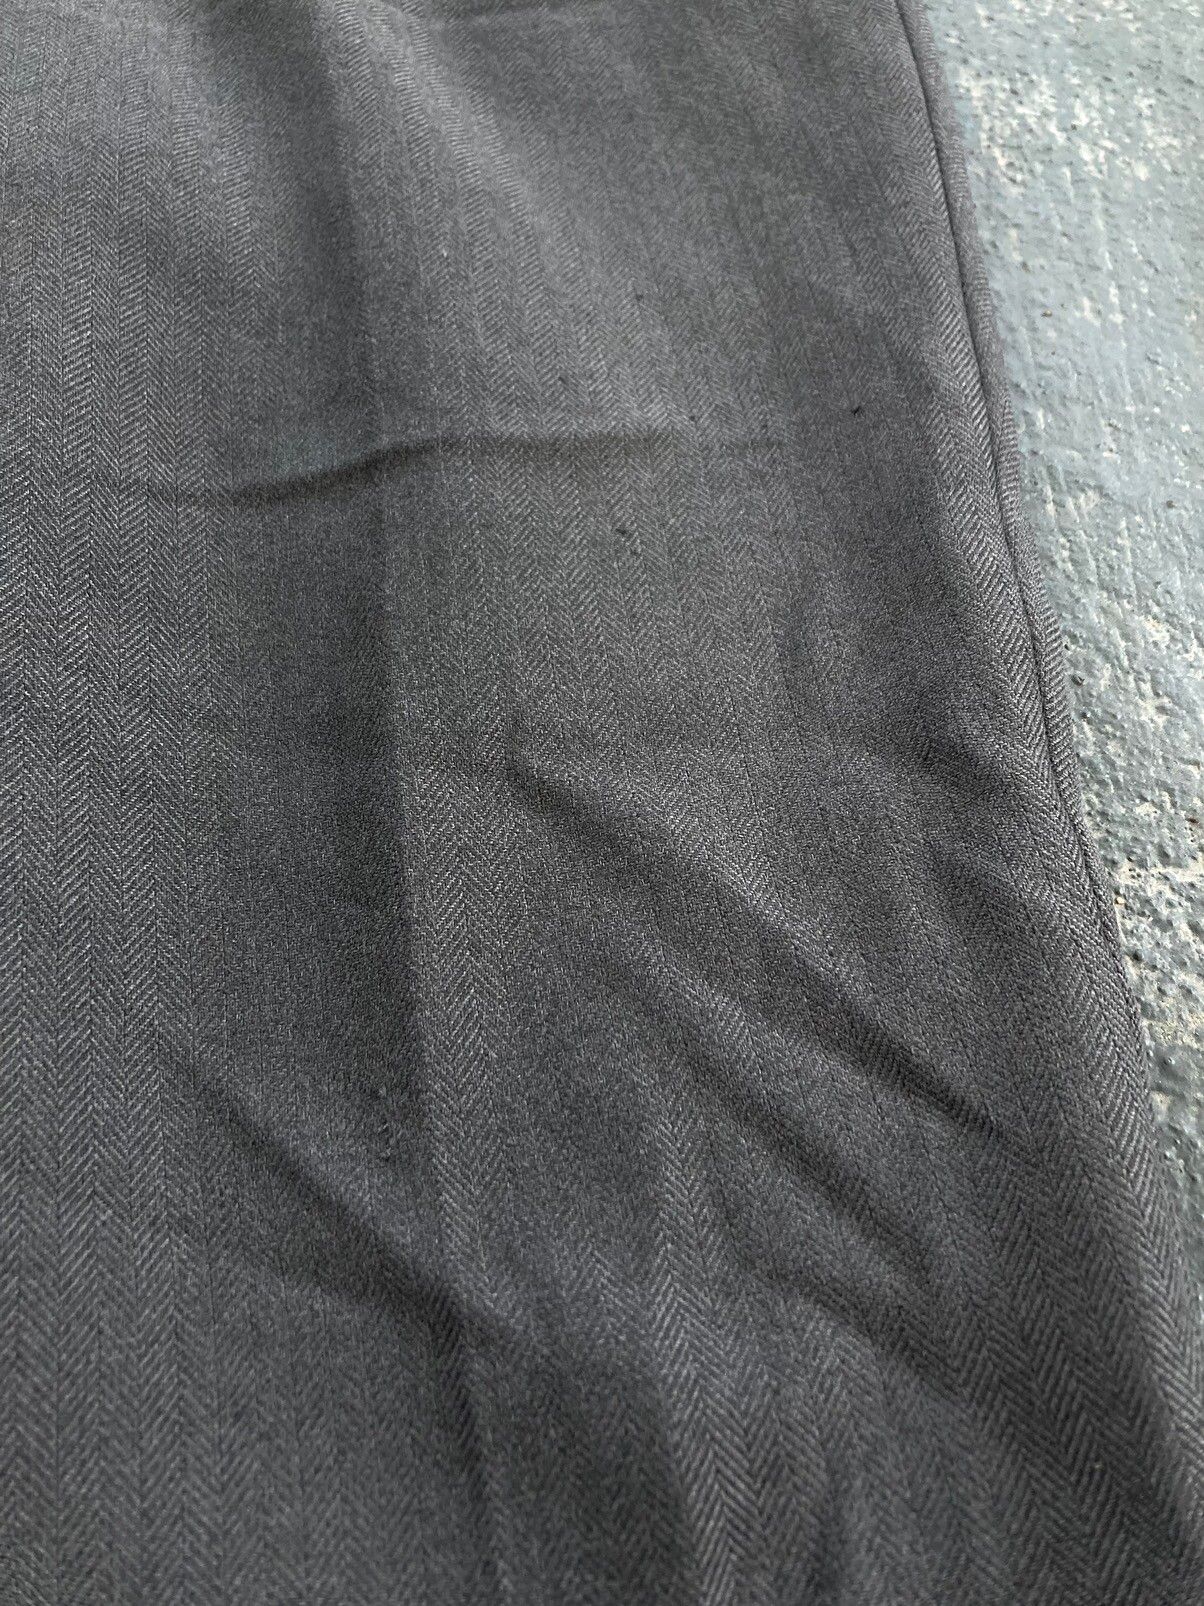 Vintage Japanese Dark Gray Baggy Slacks - 4